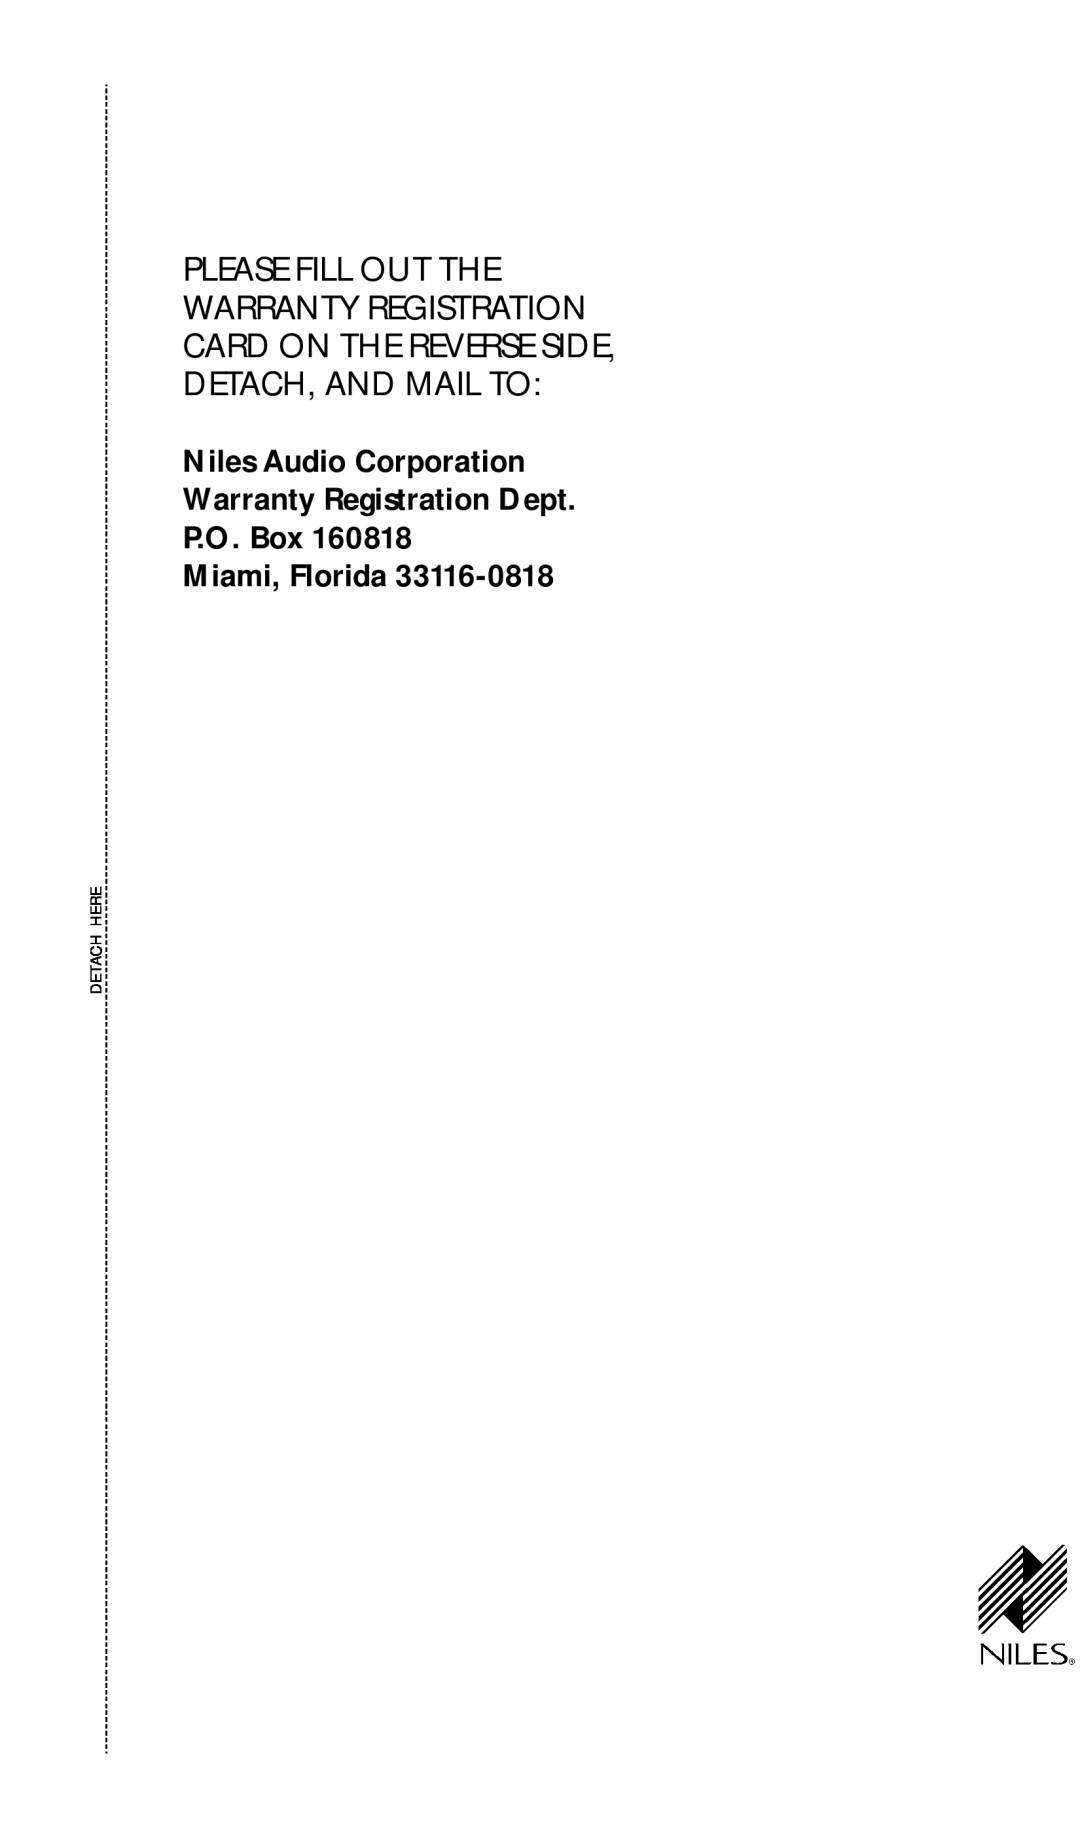 Niles Audio CS650, CS525 manual Niles Audio Corporation, Warranty Registration Dept P.O. Box, Miami, Florida, Detach Here 